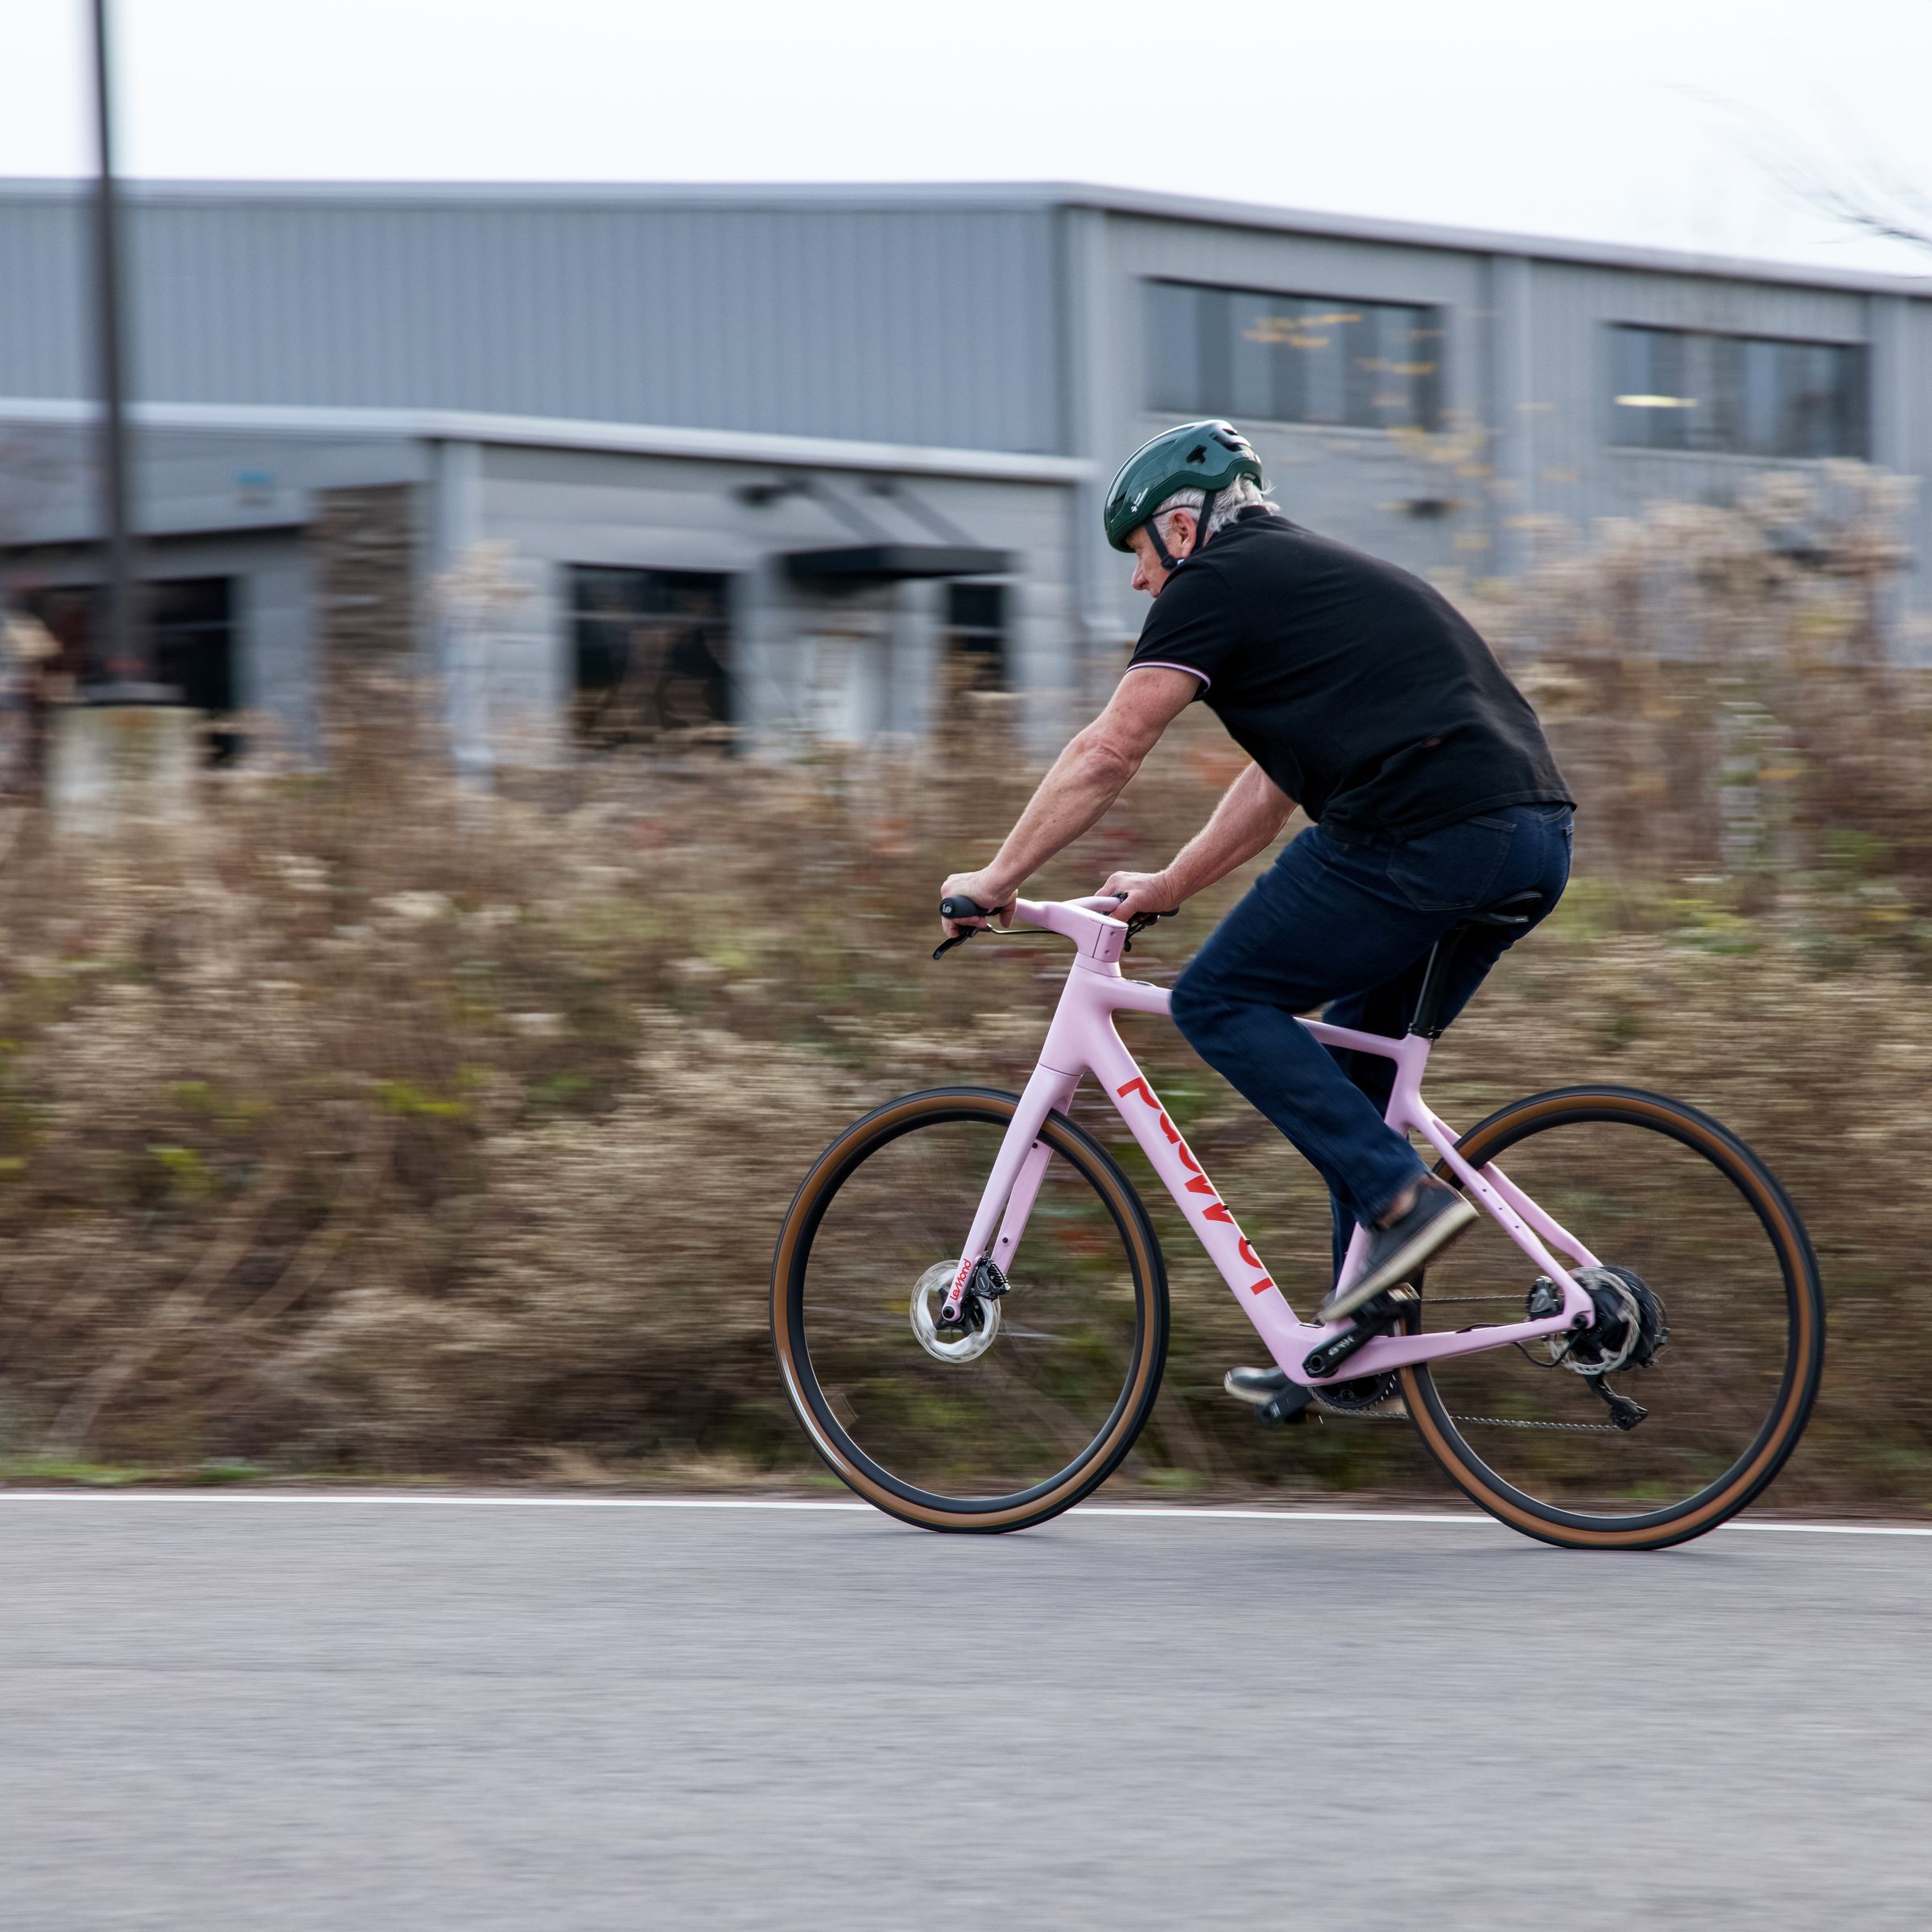 Three-time Tour de France champion Greg LeMond has a new e-bike venture.